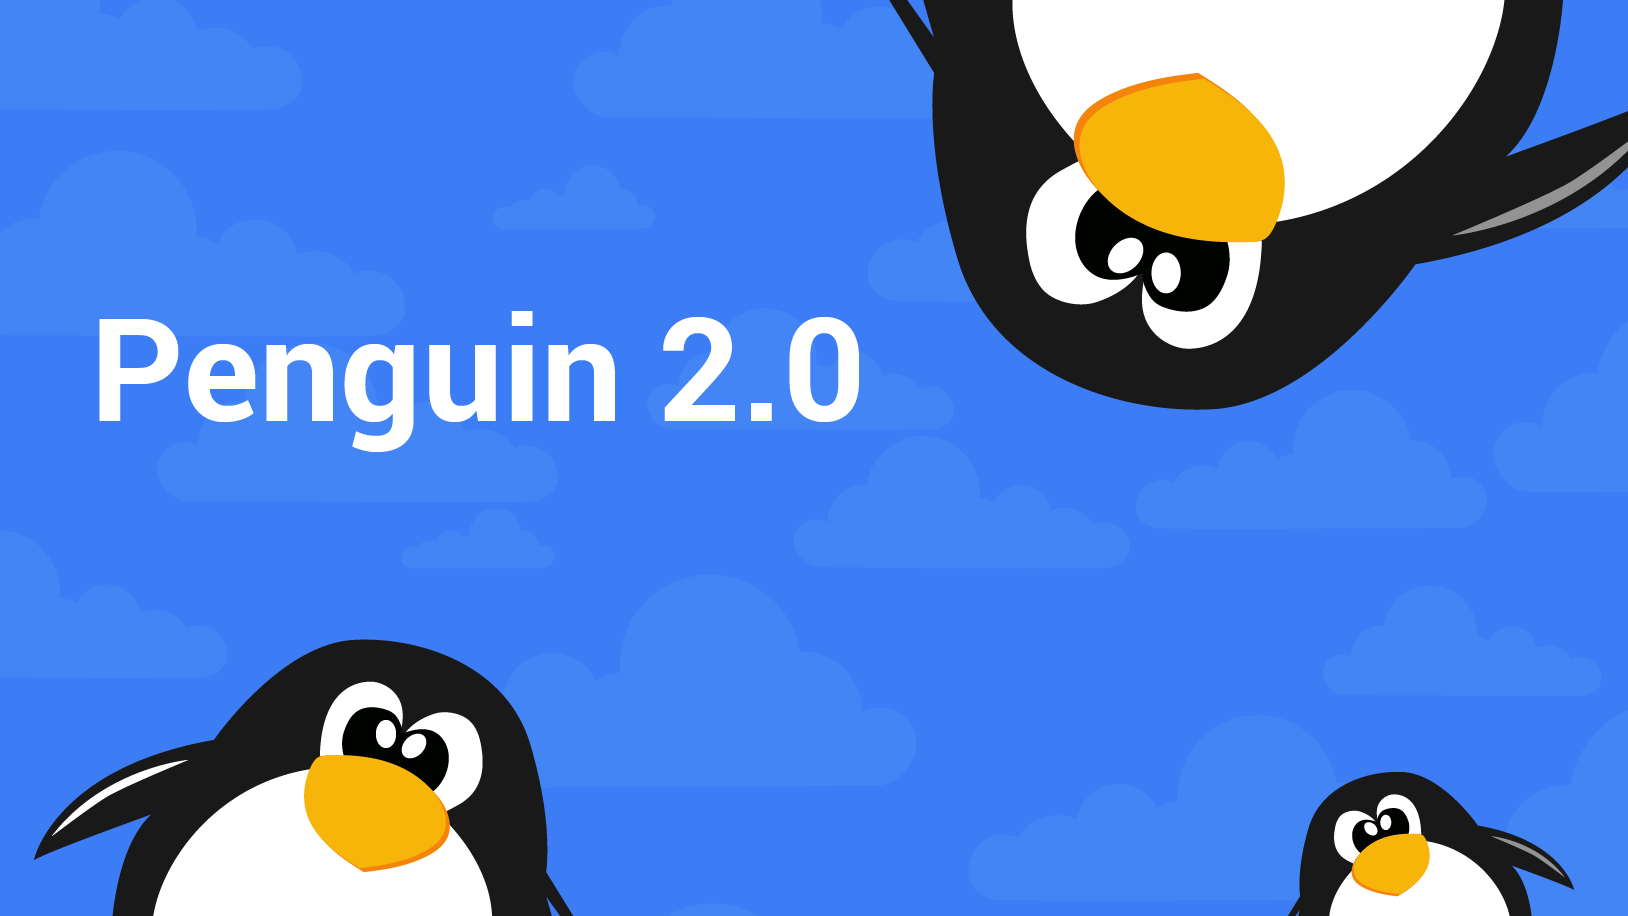 Google Penguin 2.0 update